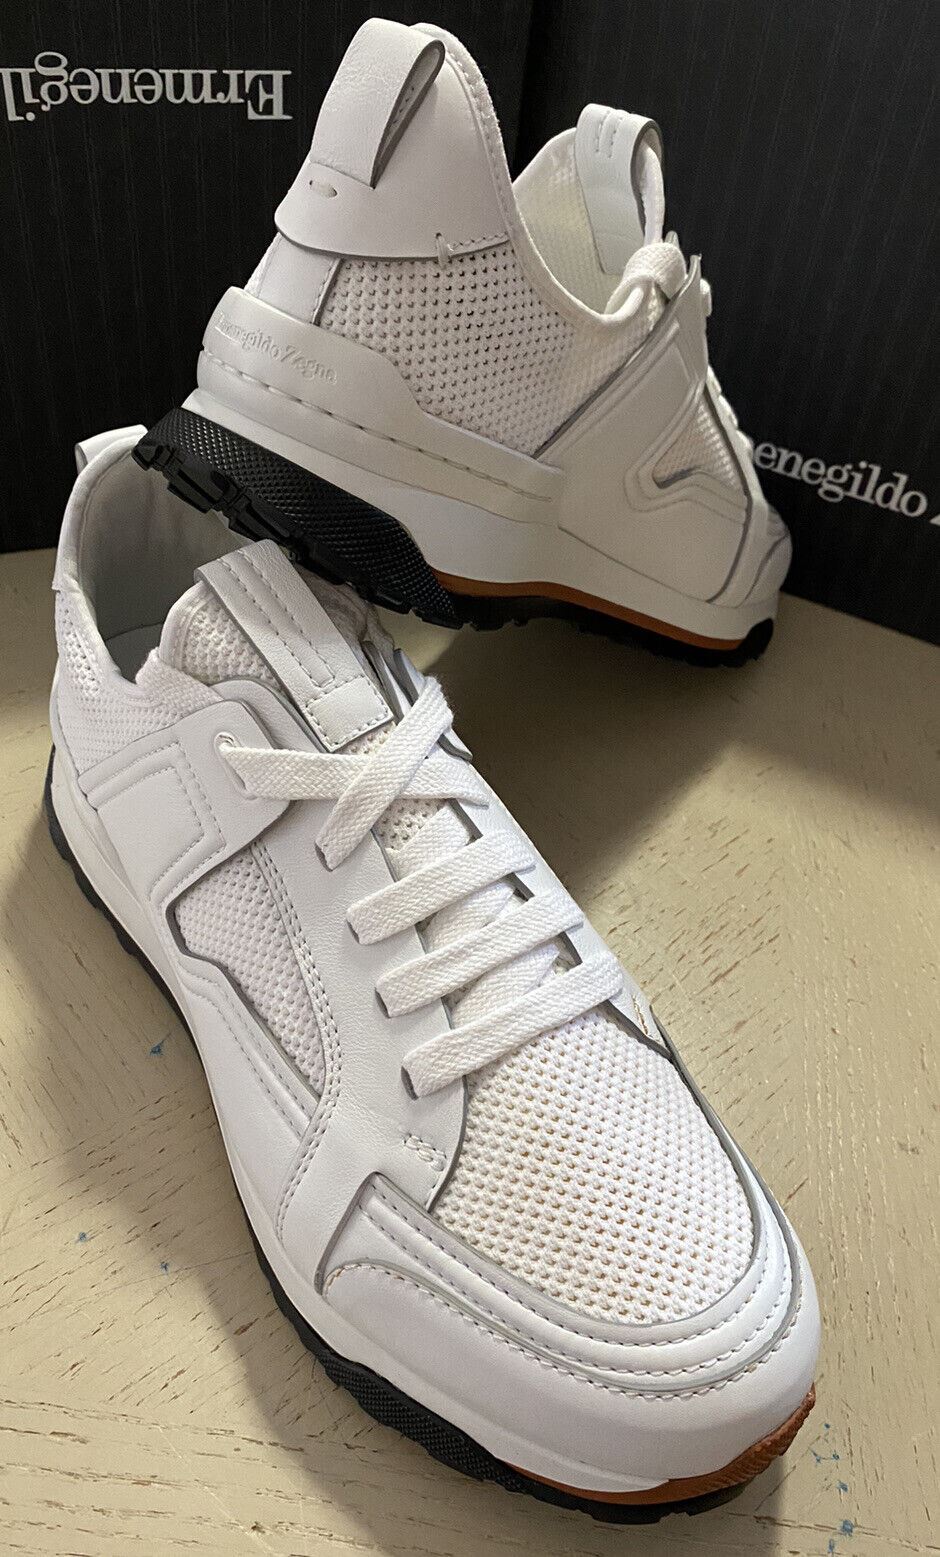 New $775 Ermenegildo Zegna Leather Sneakers Shoes White 11.5 US Italy